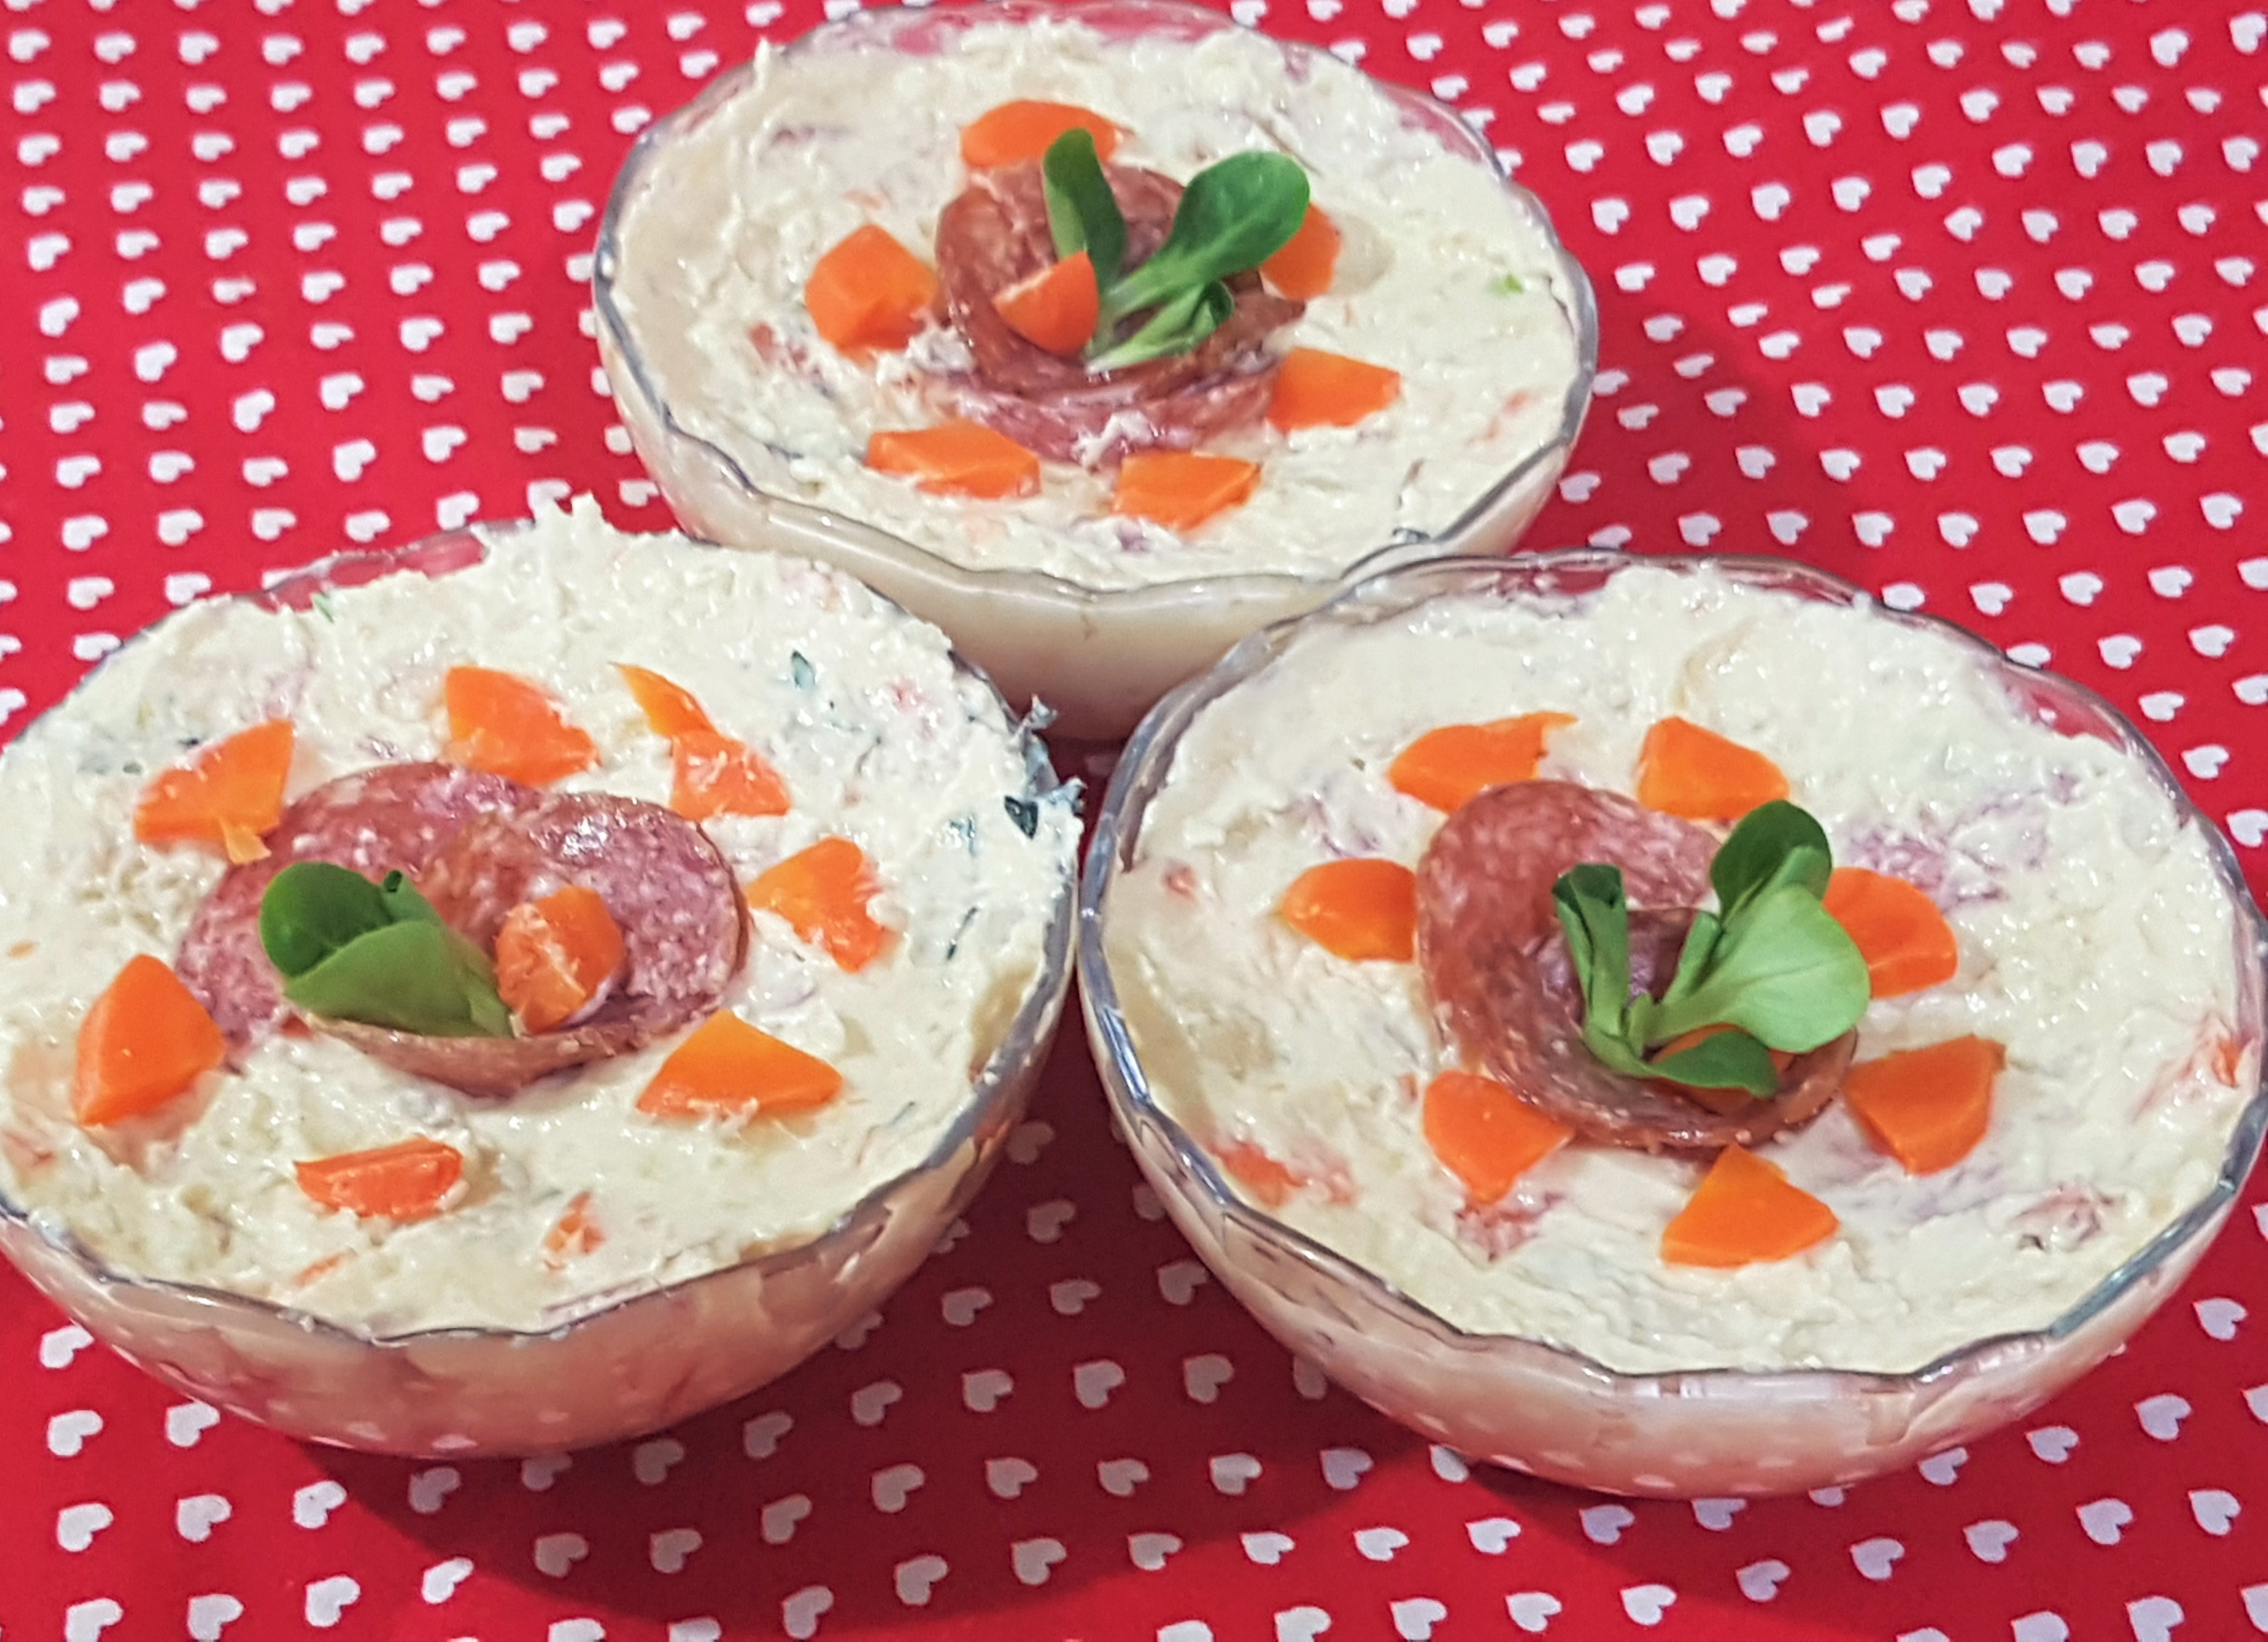 Salata de conopida cu iaurt, morcov si salam crud-uscat